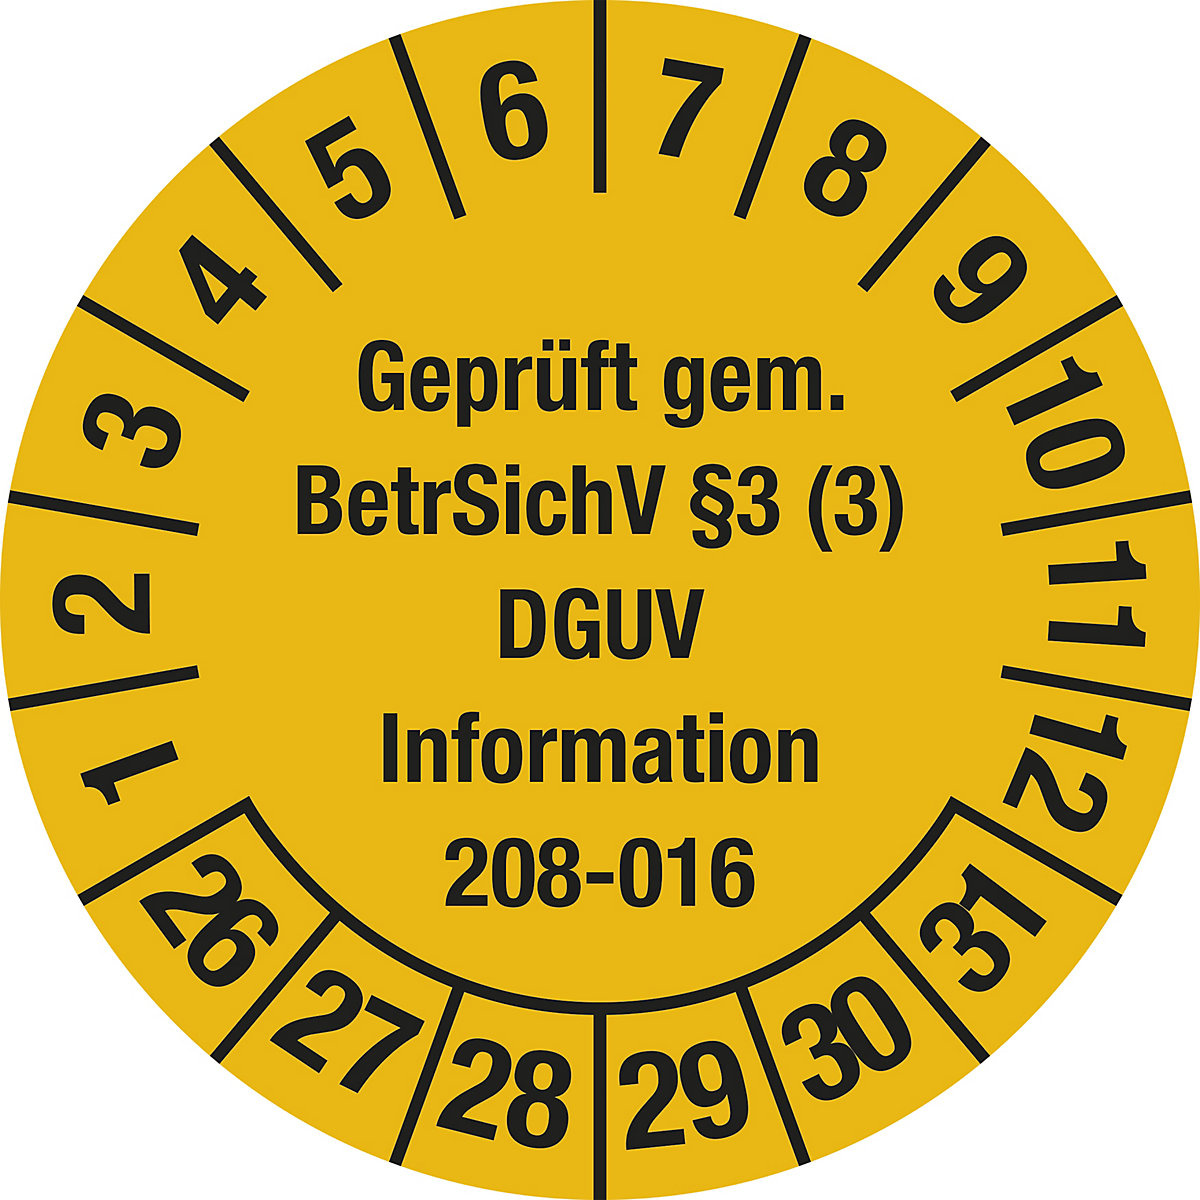 Geprüft gem BetrSichV §3, Dokumentenfolie, Ø 30 mm, VE 10 Stk, 26 – 31, gelb-2